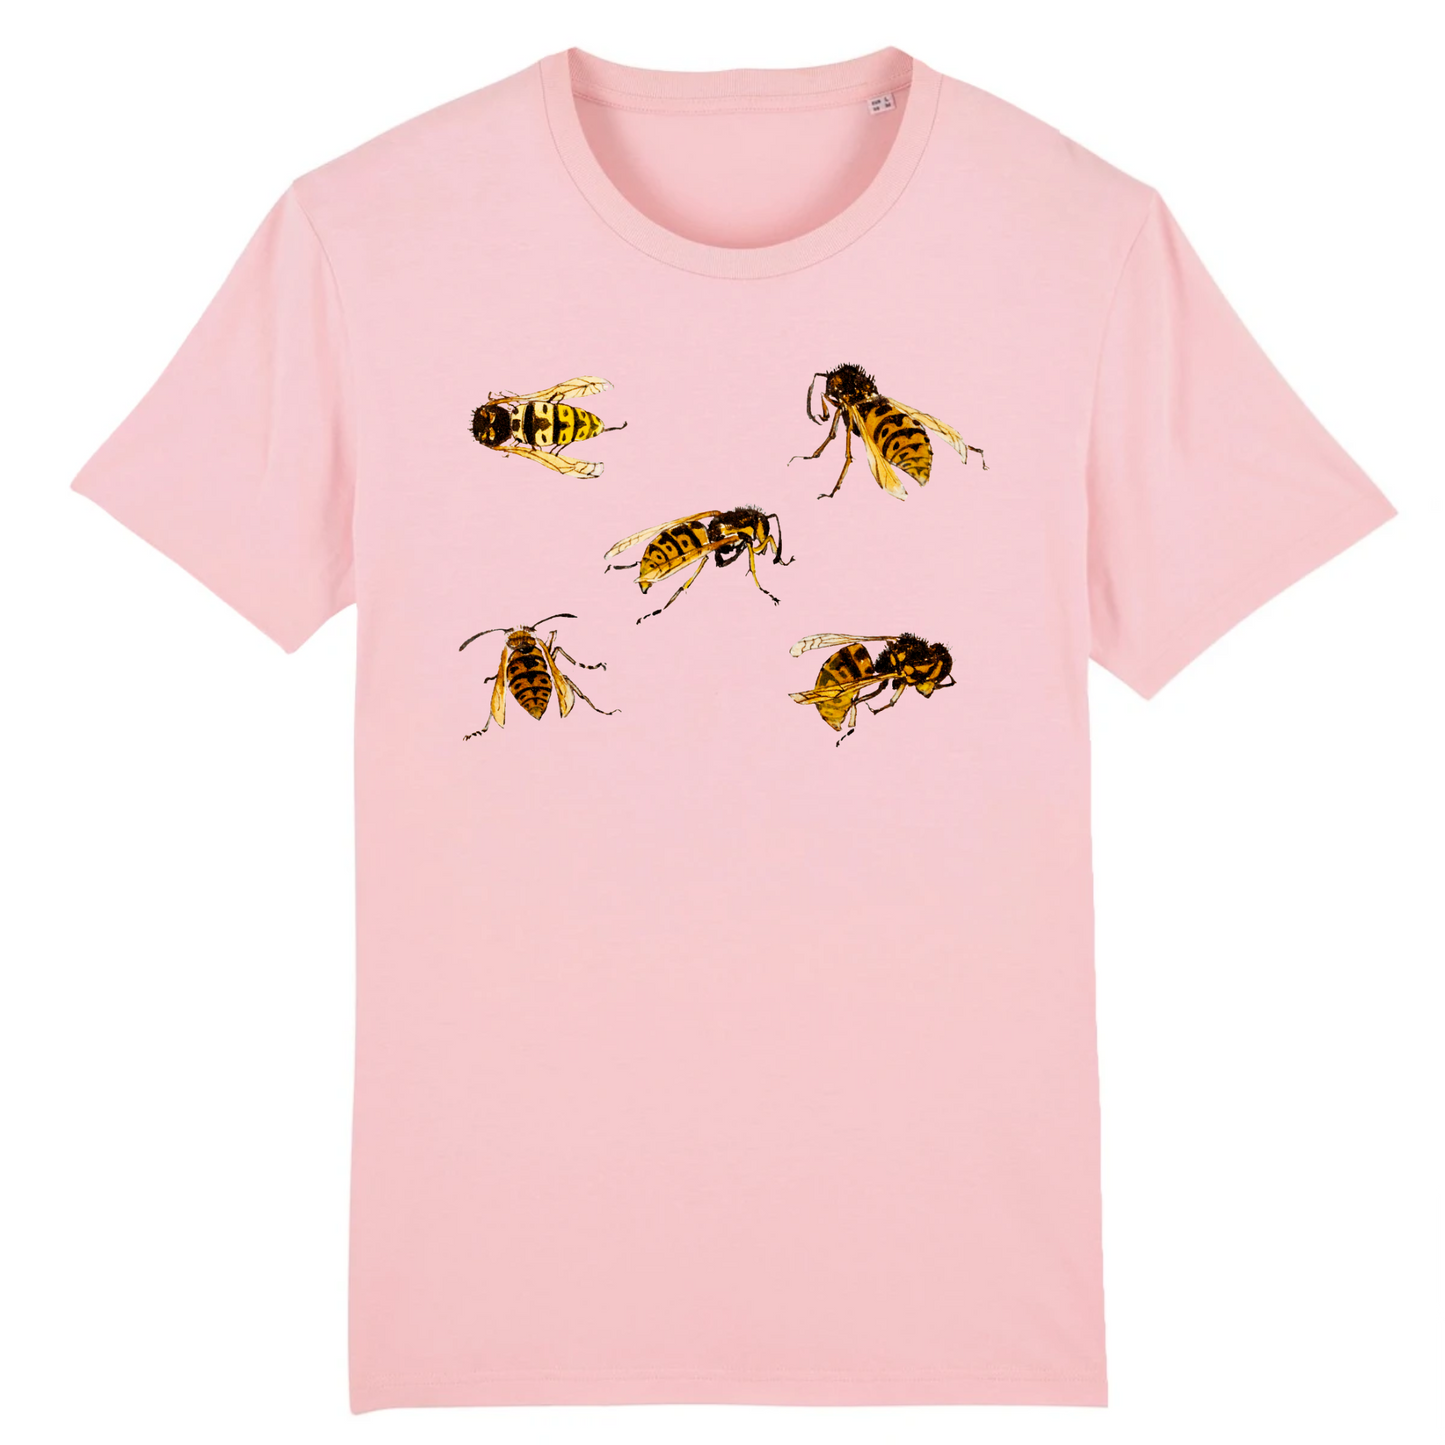 Studies of wasps by Julie de Graag, c. 1915 - Organic Cotton T-Shirt